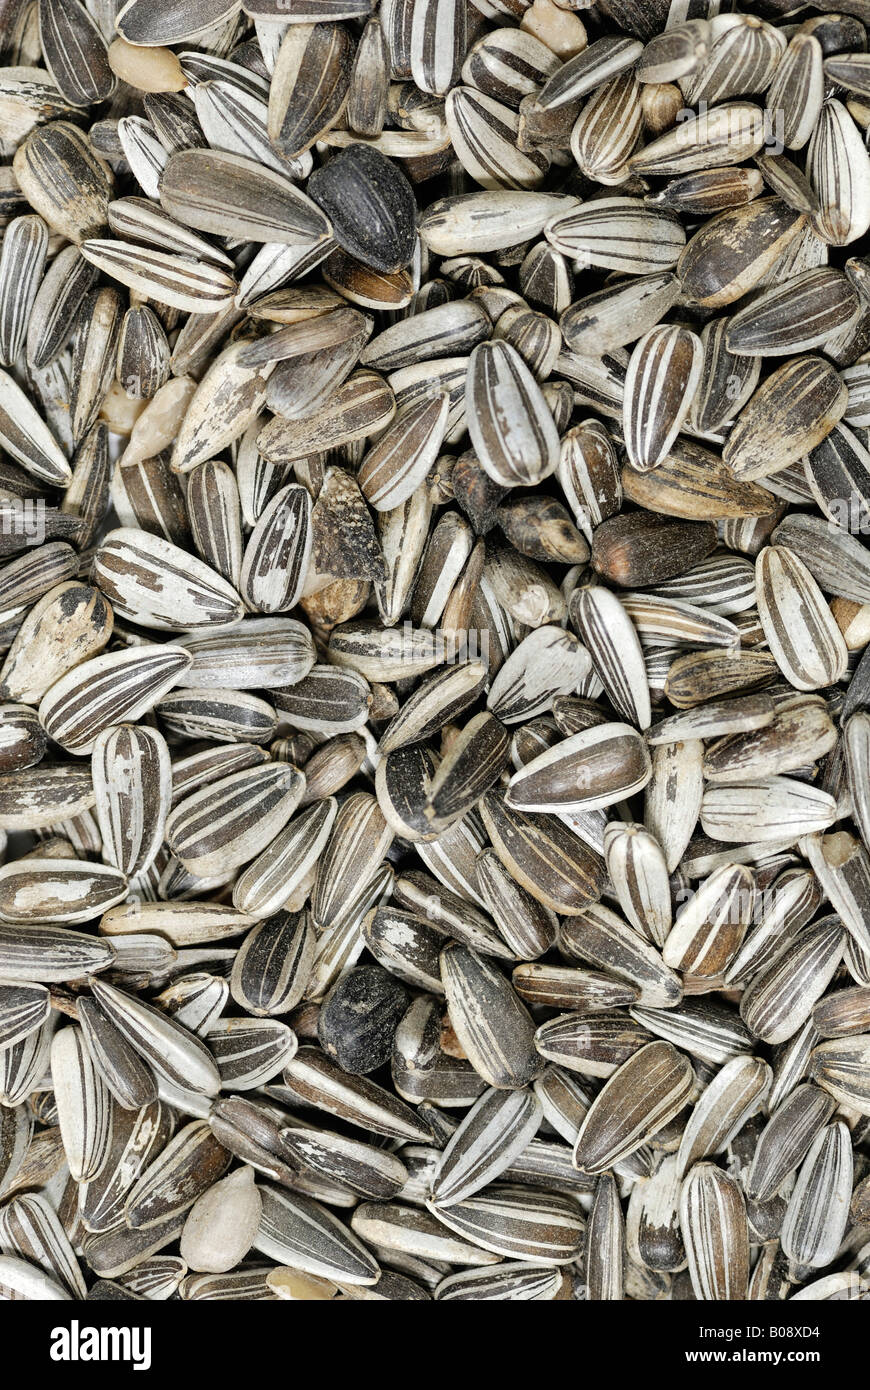 Sunflower seeds, unshelled Stock Photo